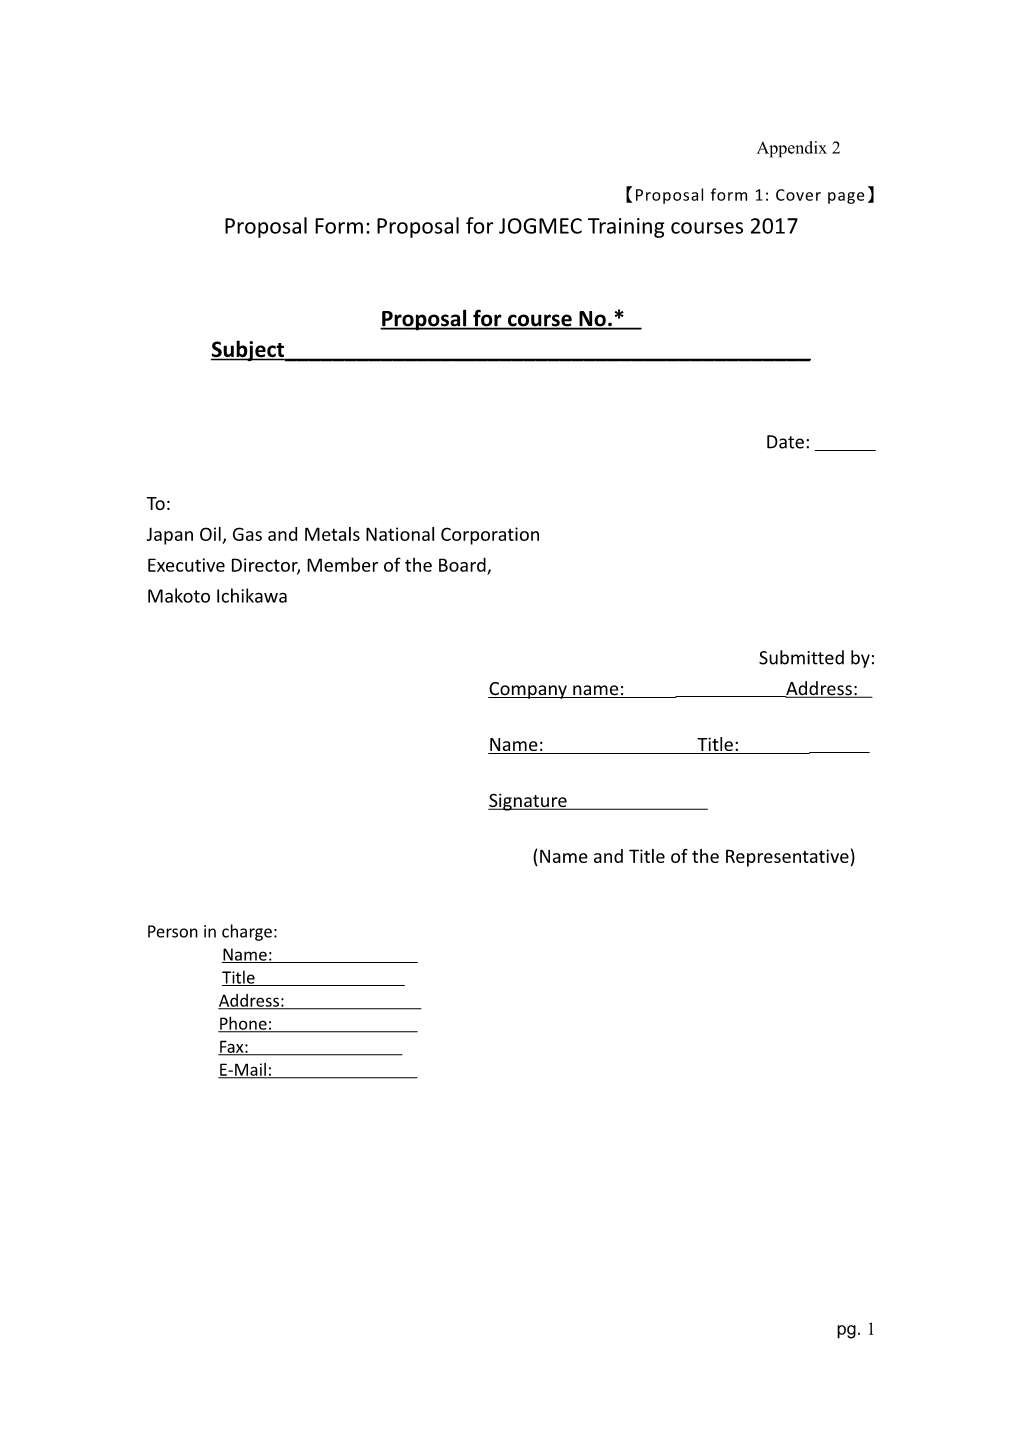 Proposal Form:Proposal for JOGMEC Training Courses 2017